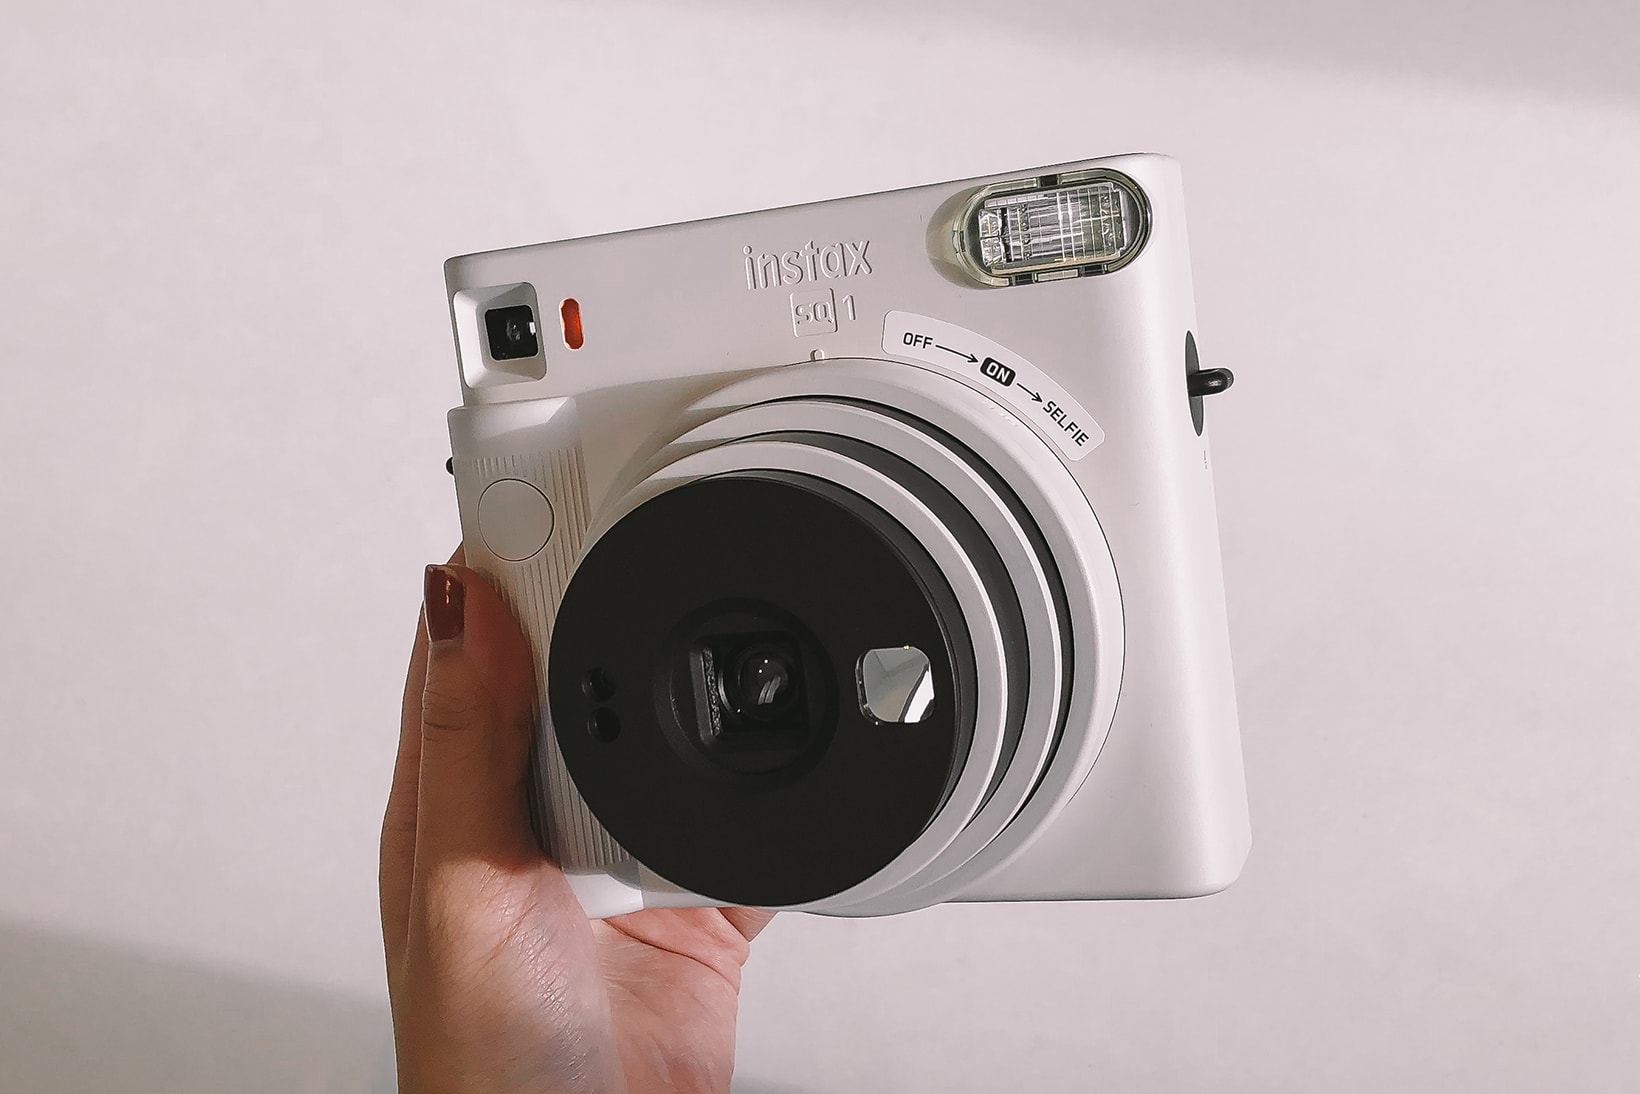 Fujifilm Instax SQUARE SQ1 Instant Camera with Selfie Mode, Built